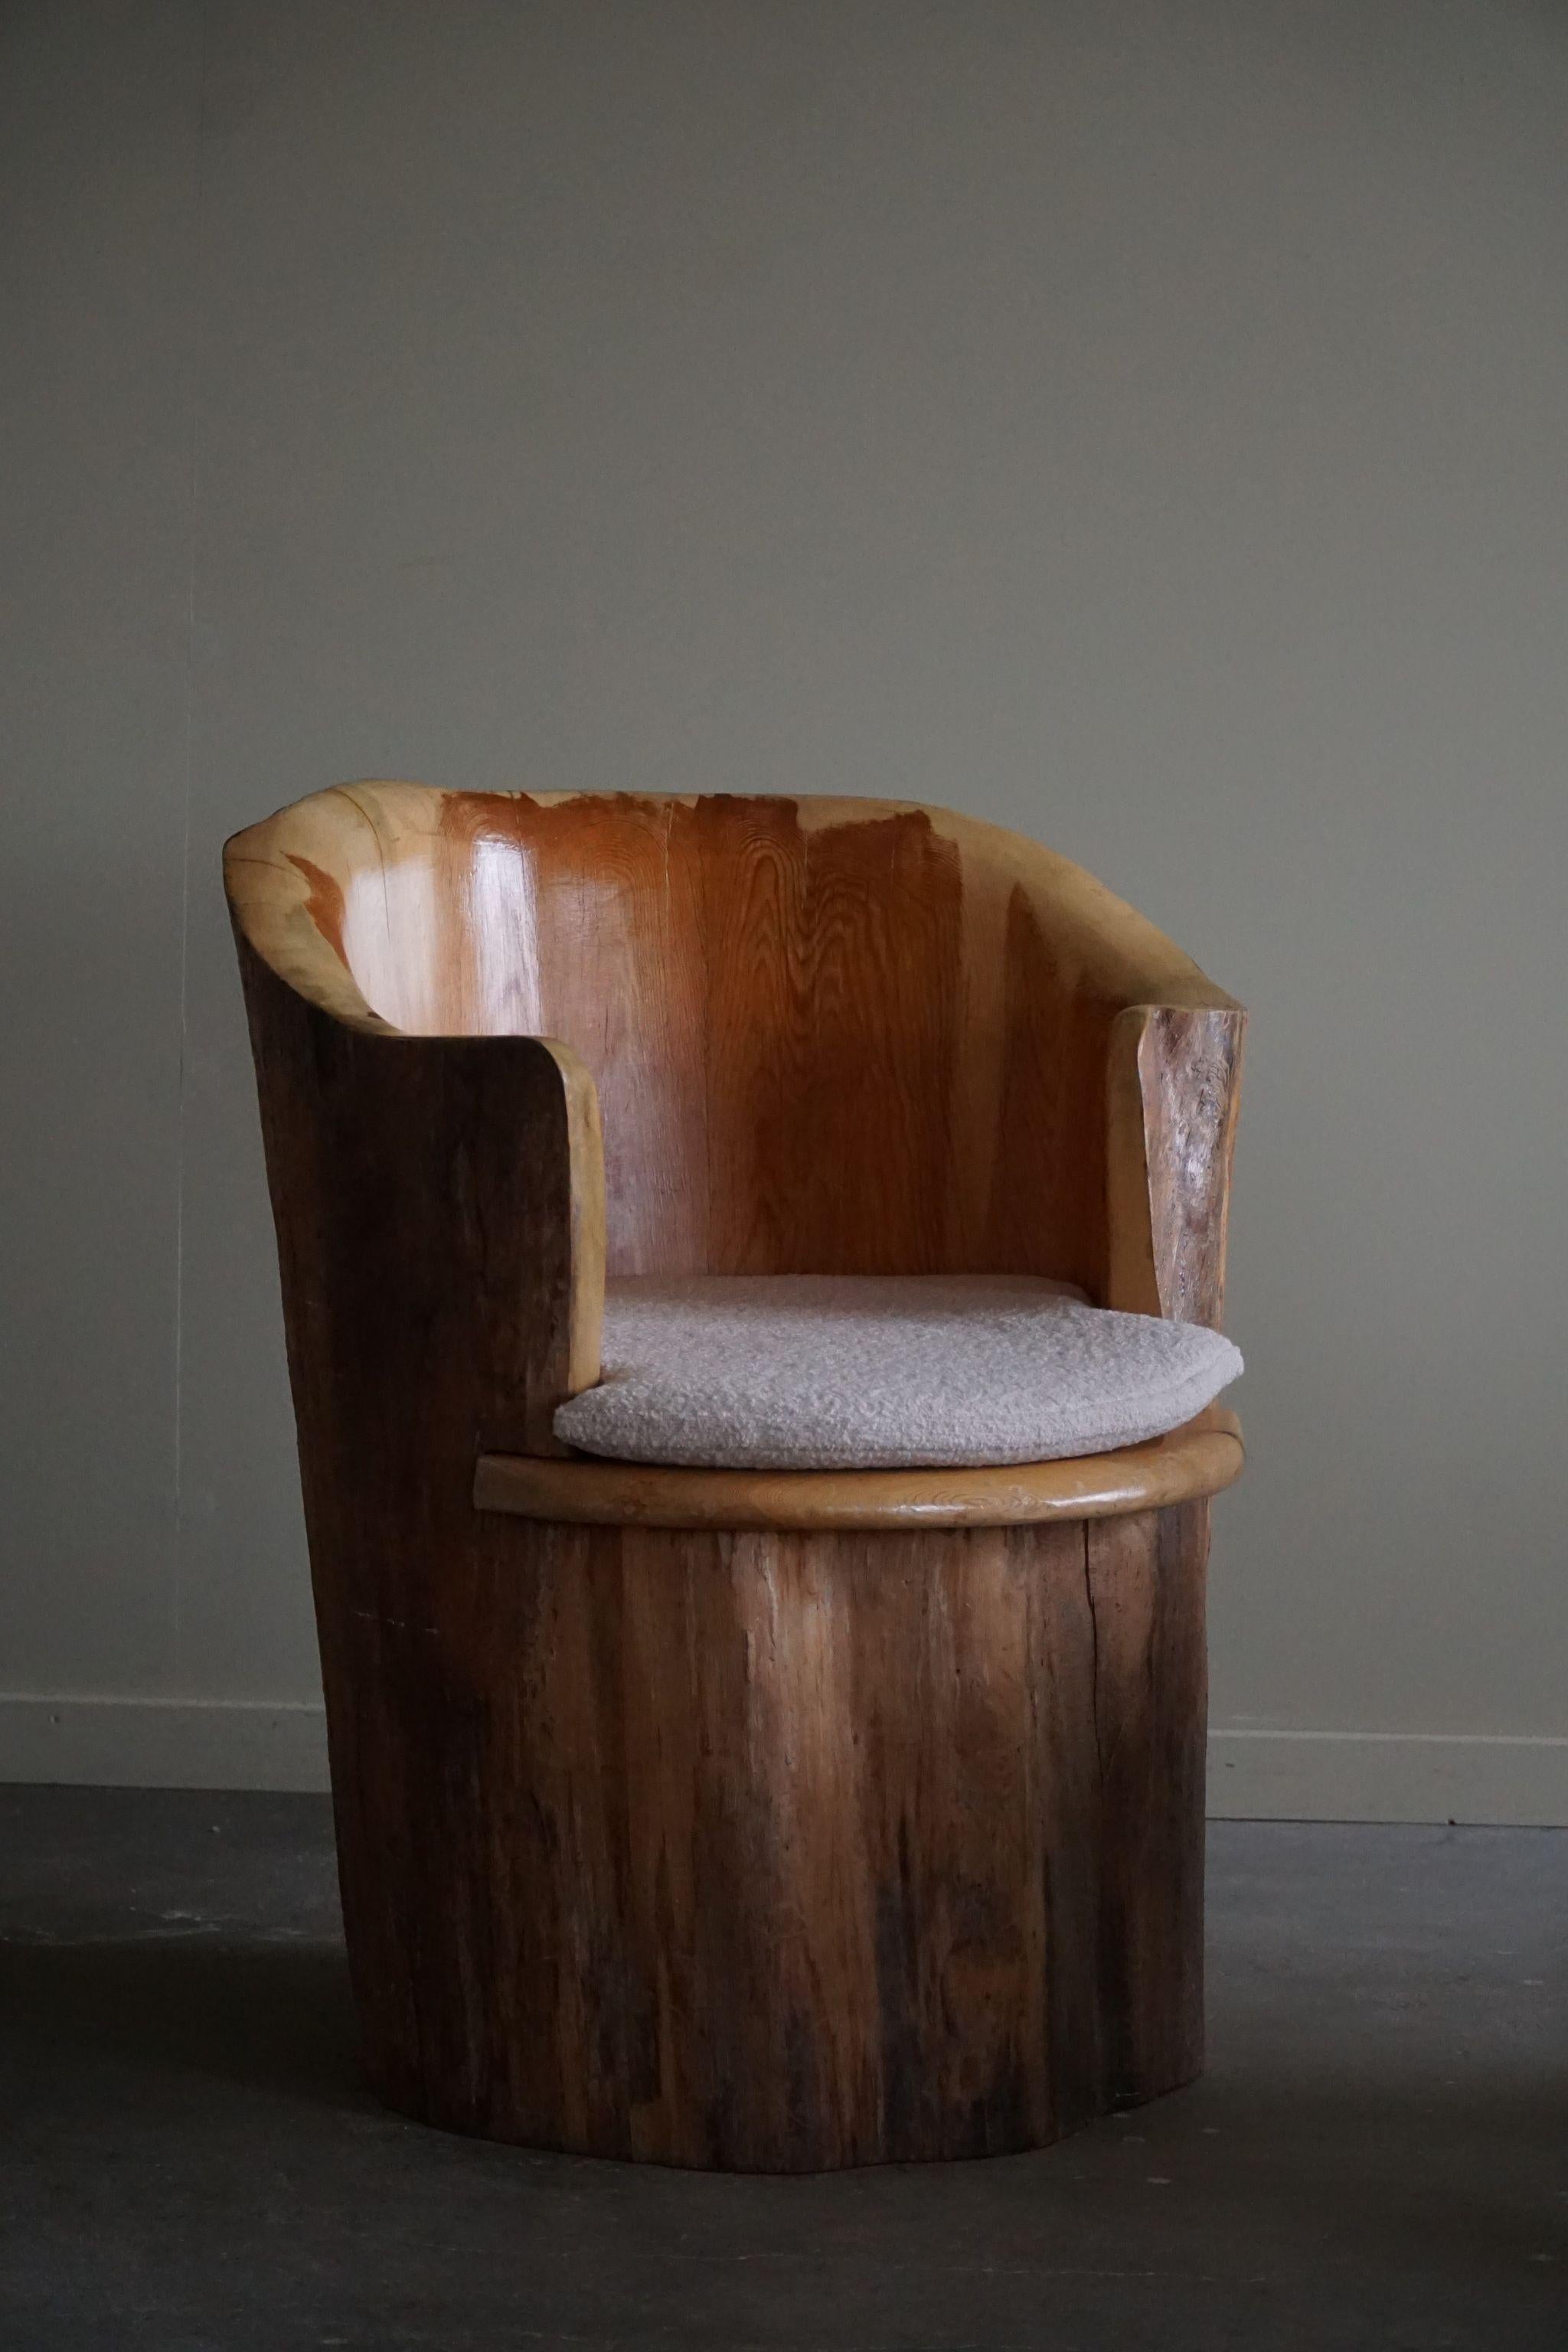 Sculptural Carved Wabi Sabi Brutalist Stump Chair in Solid Pine, Swedish, 1968 For Sale 10